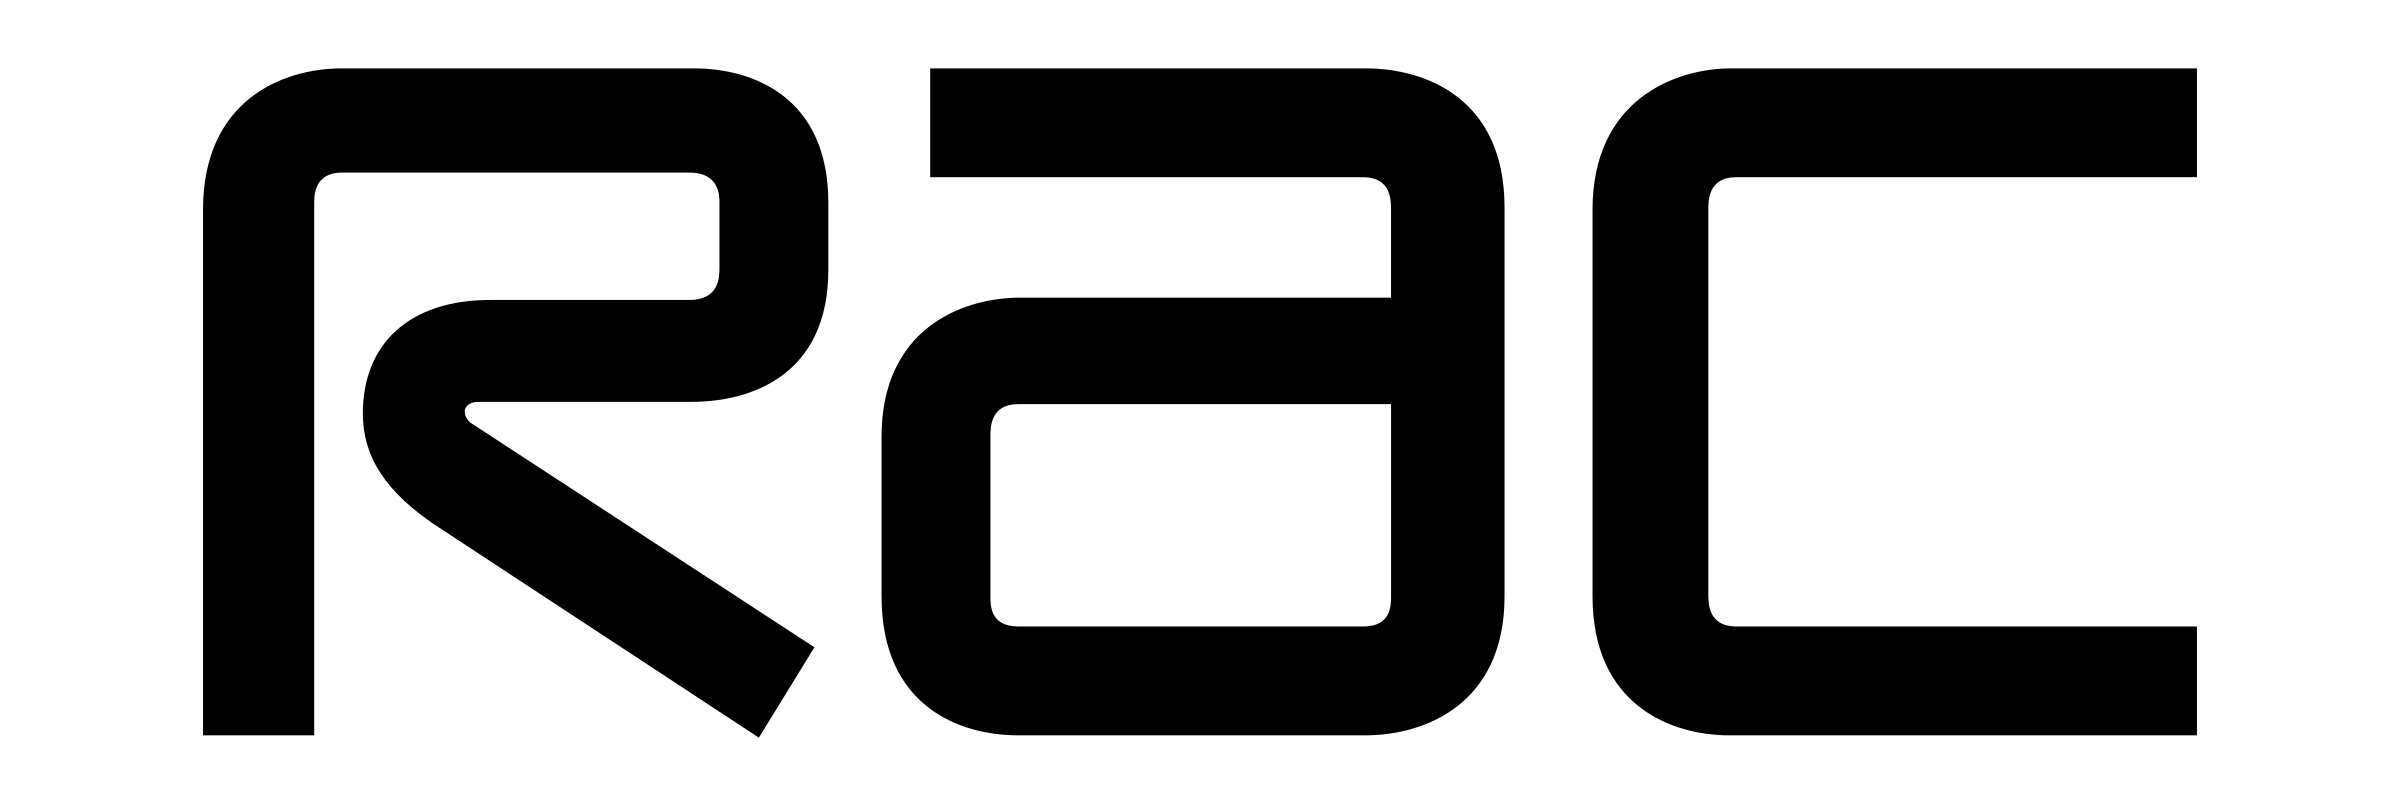 rac-2-logo-black-and-white (1)